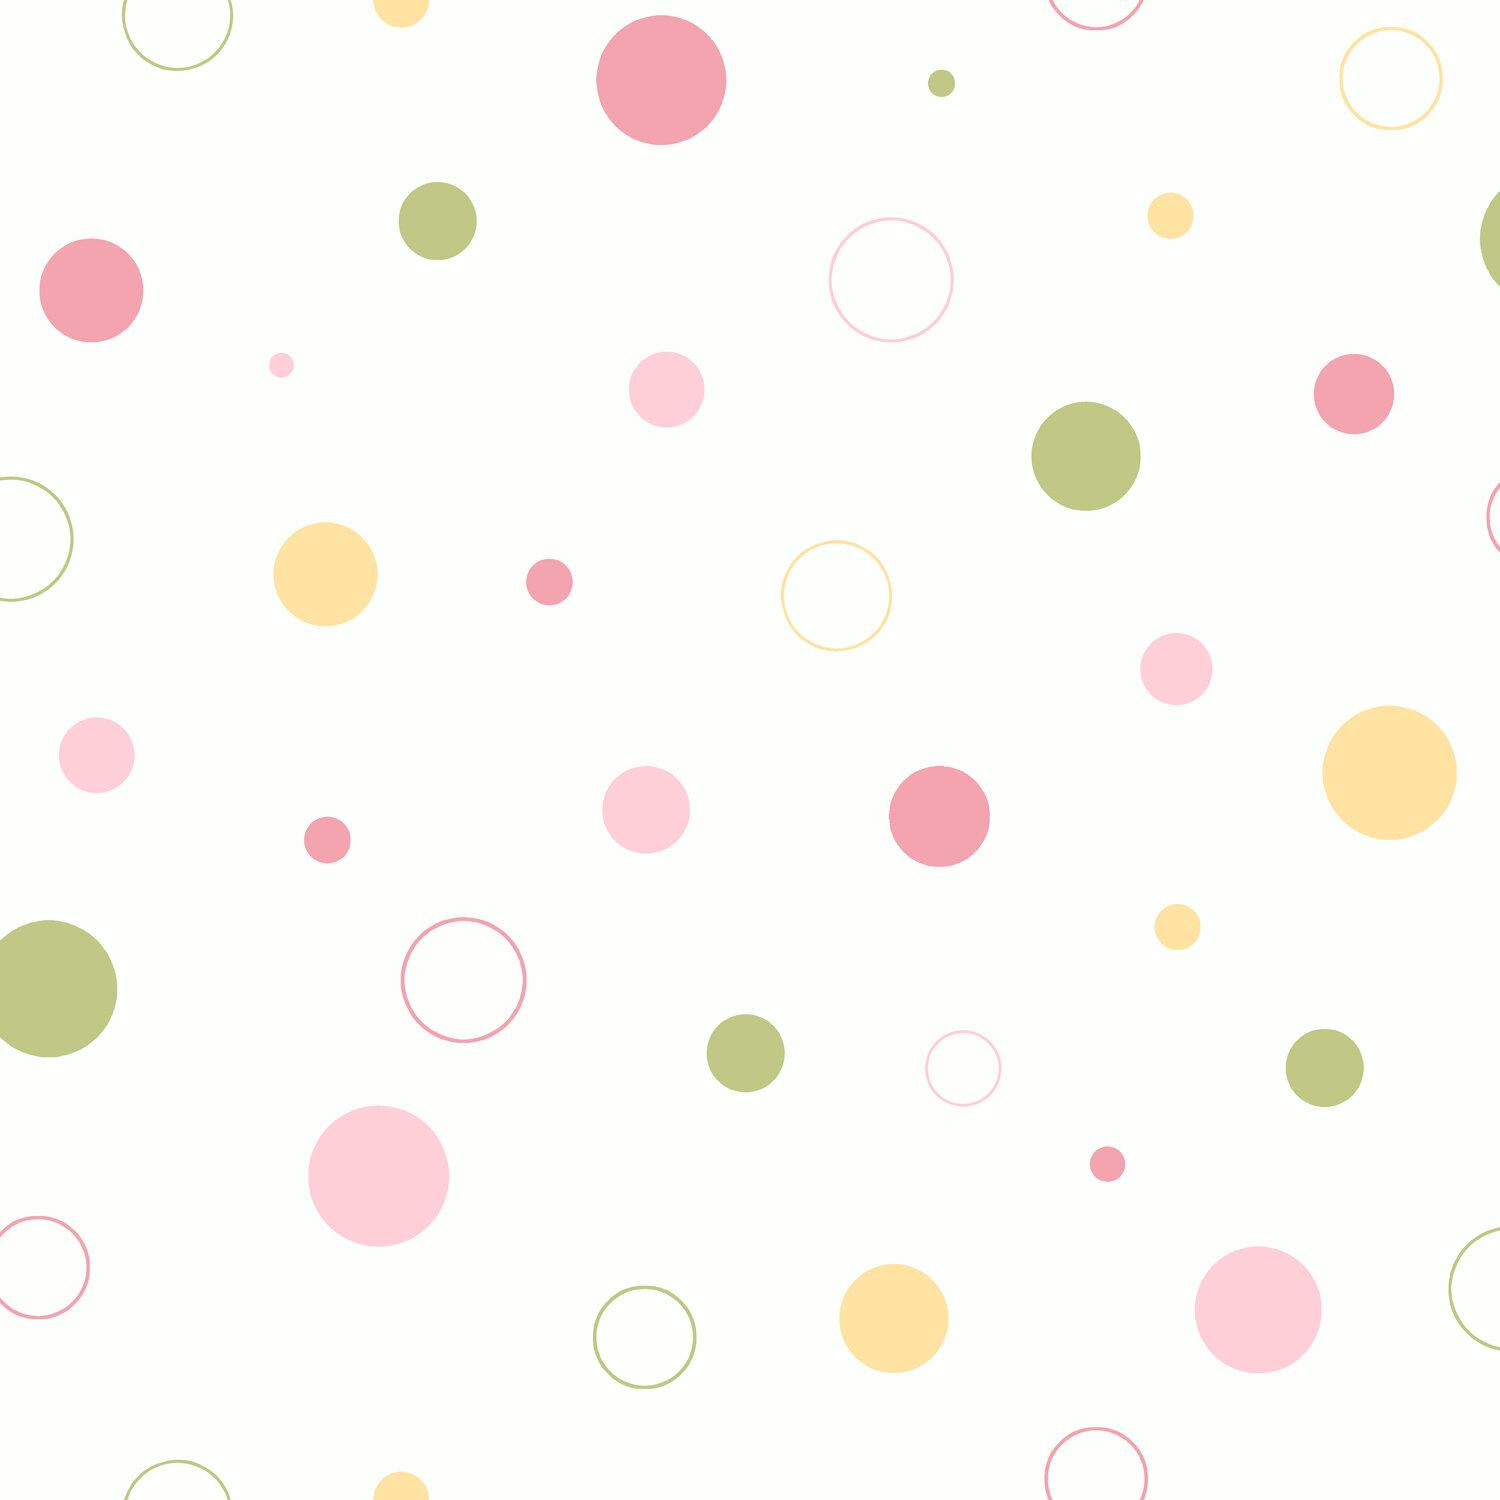 Pastel Polka Dots Wallpapers - Top Free Pastel Polka Dots Backgrounds ...